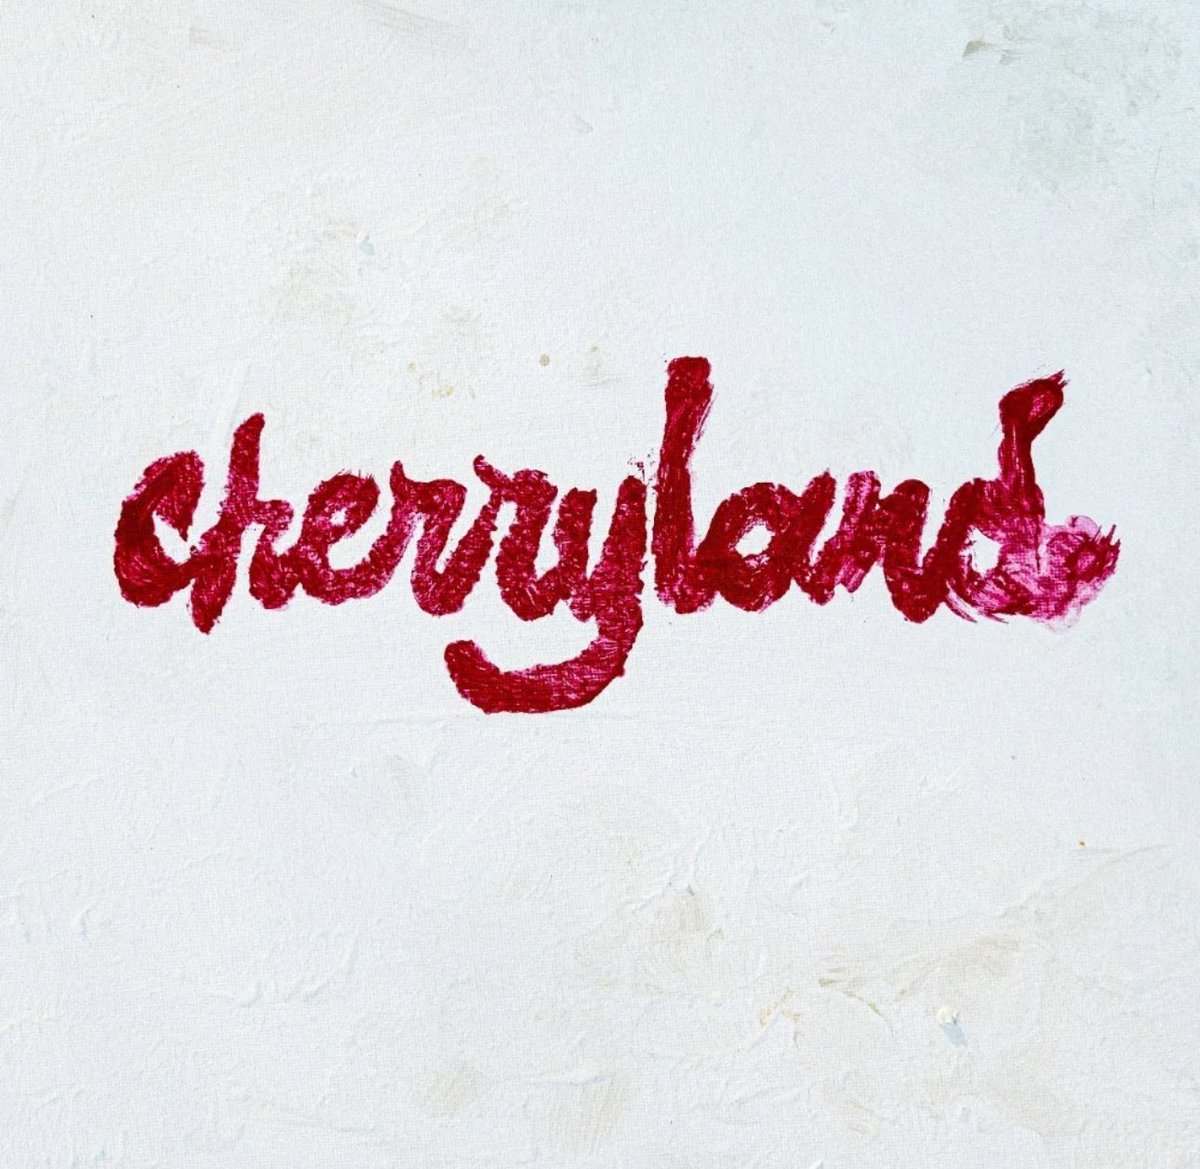 cherryland deluxe ; out tonight at midnight est. 4 new songs🍒 stem.ffm.to/cherrylanddelu…